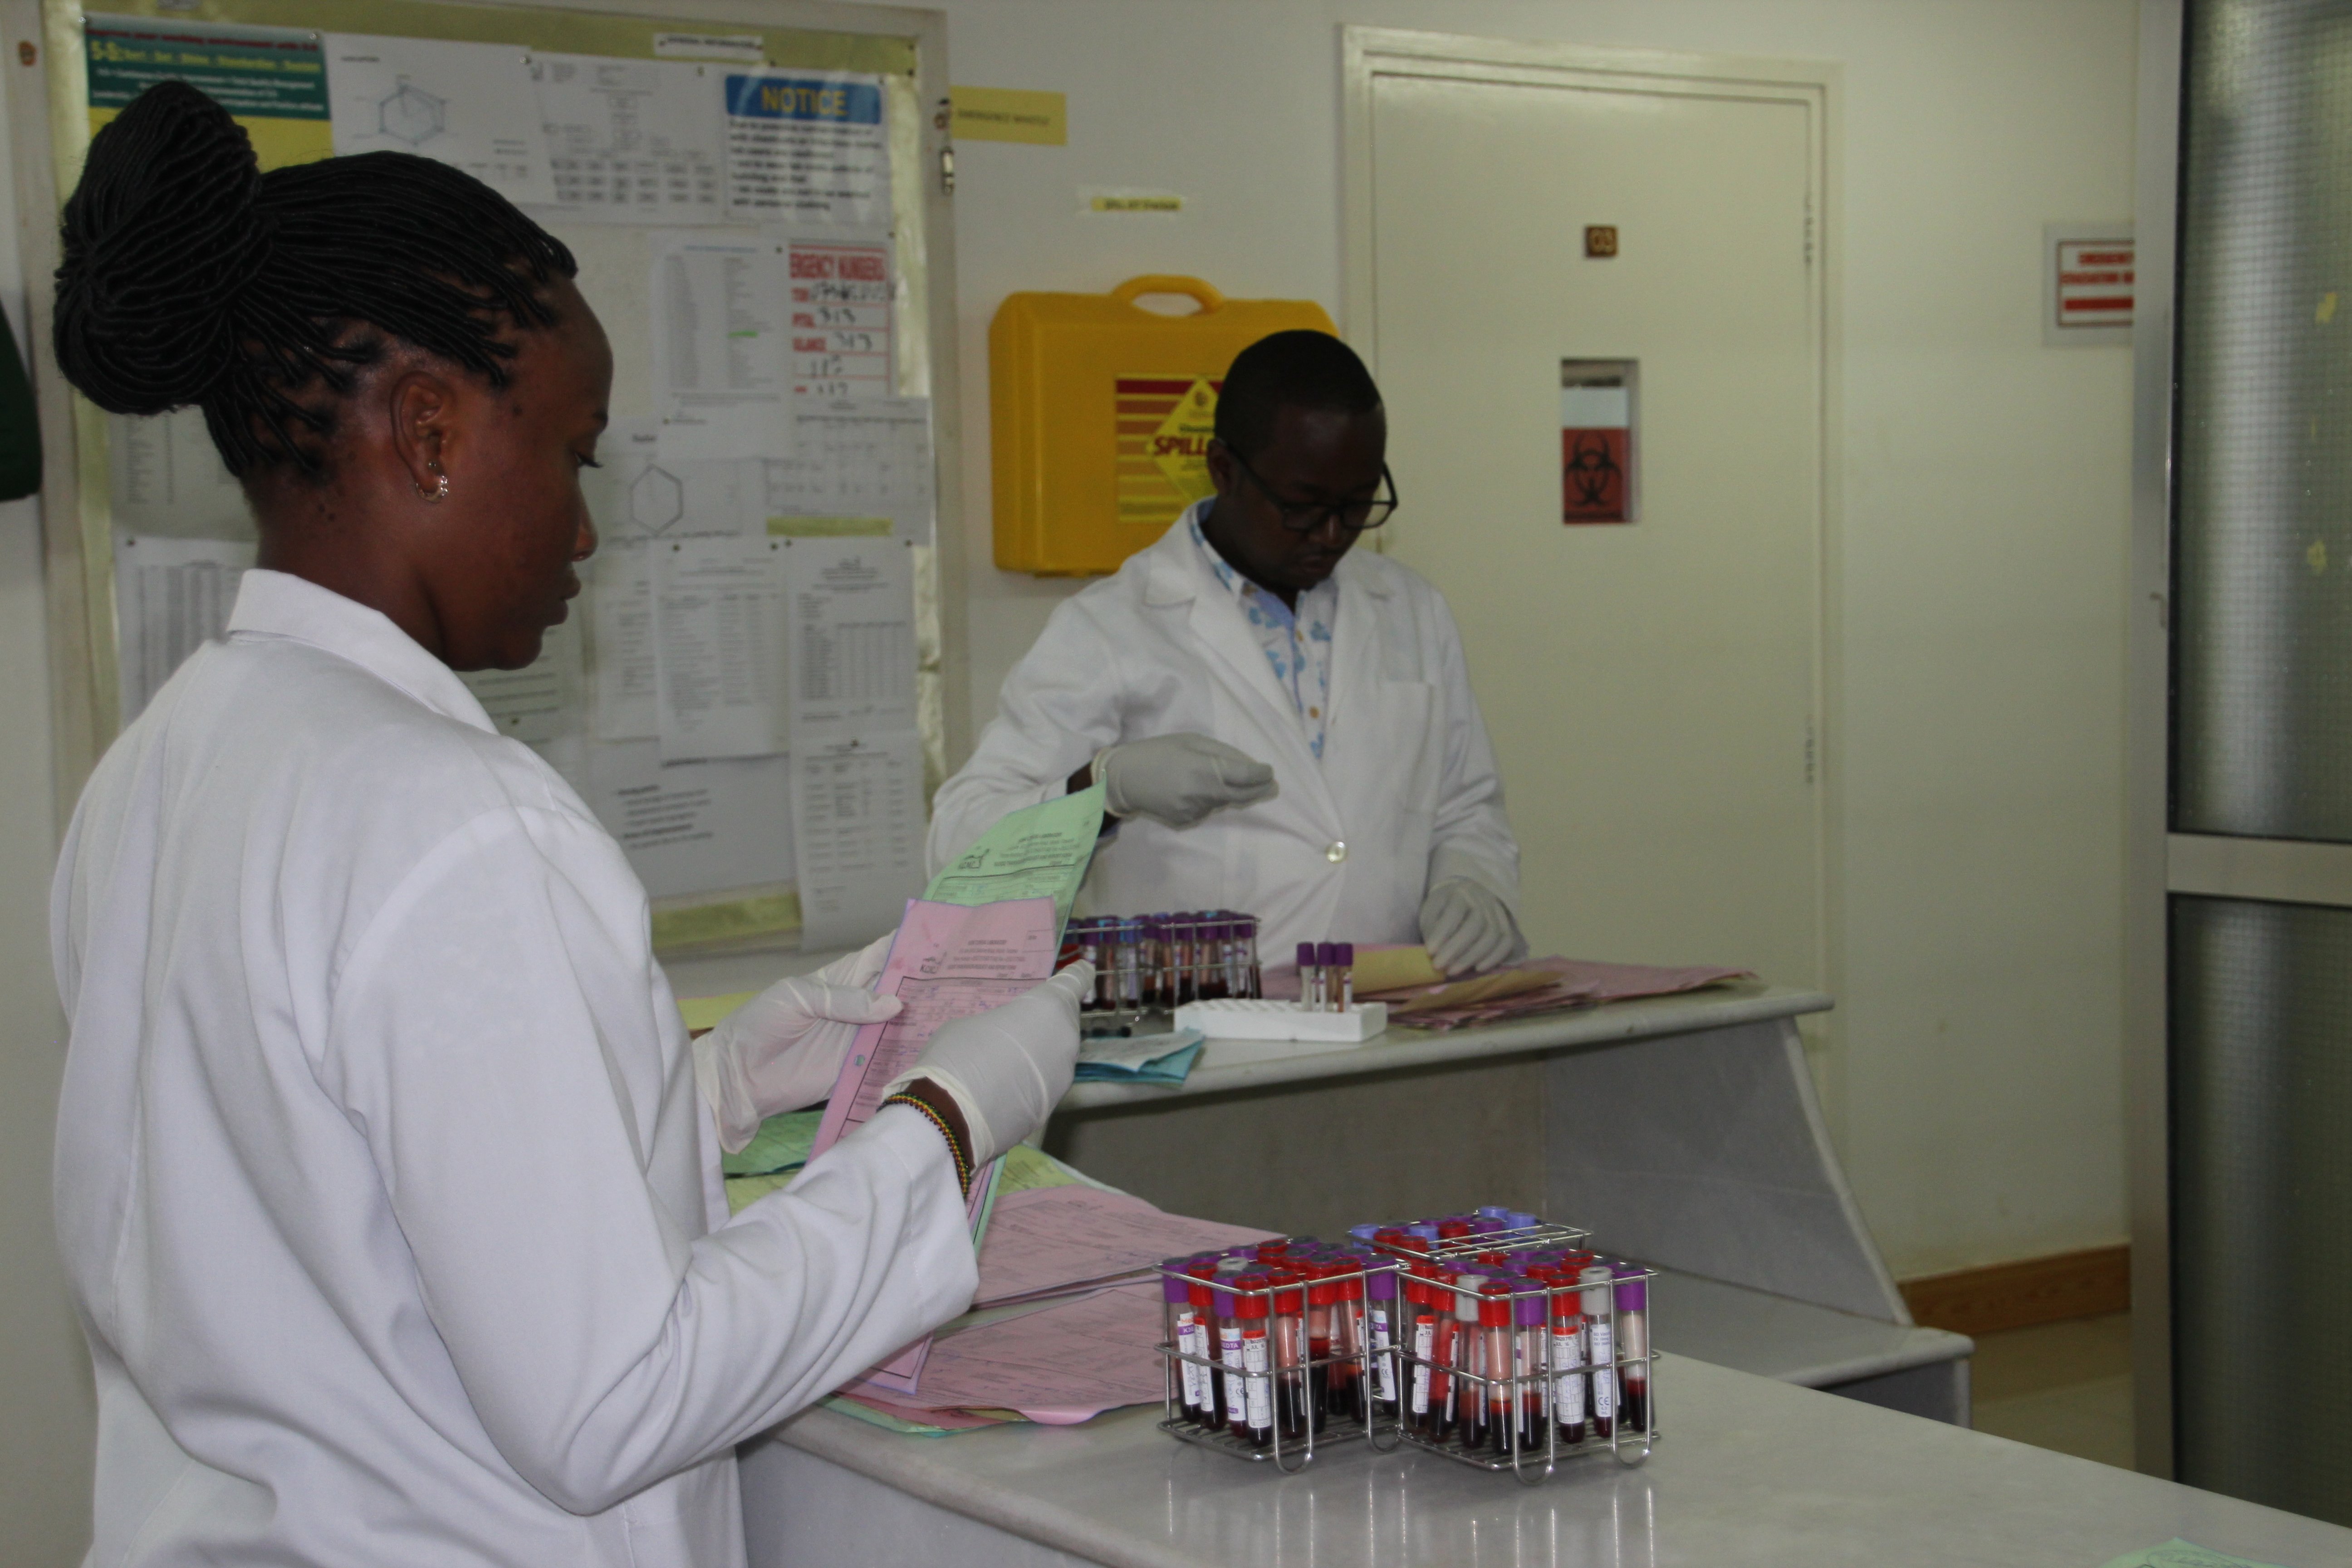 Laboratory workers wearing white uniforms_3881.JPG